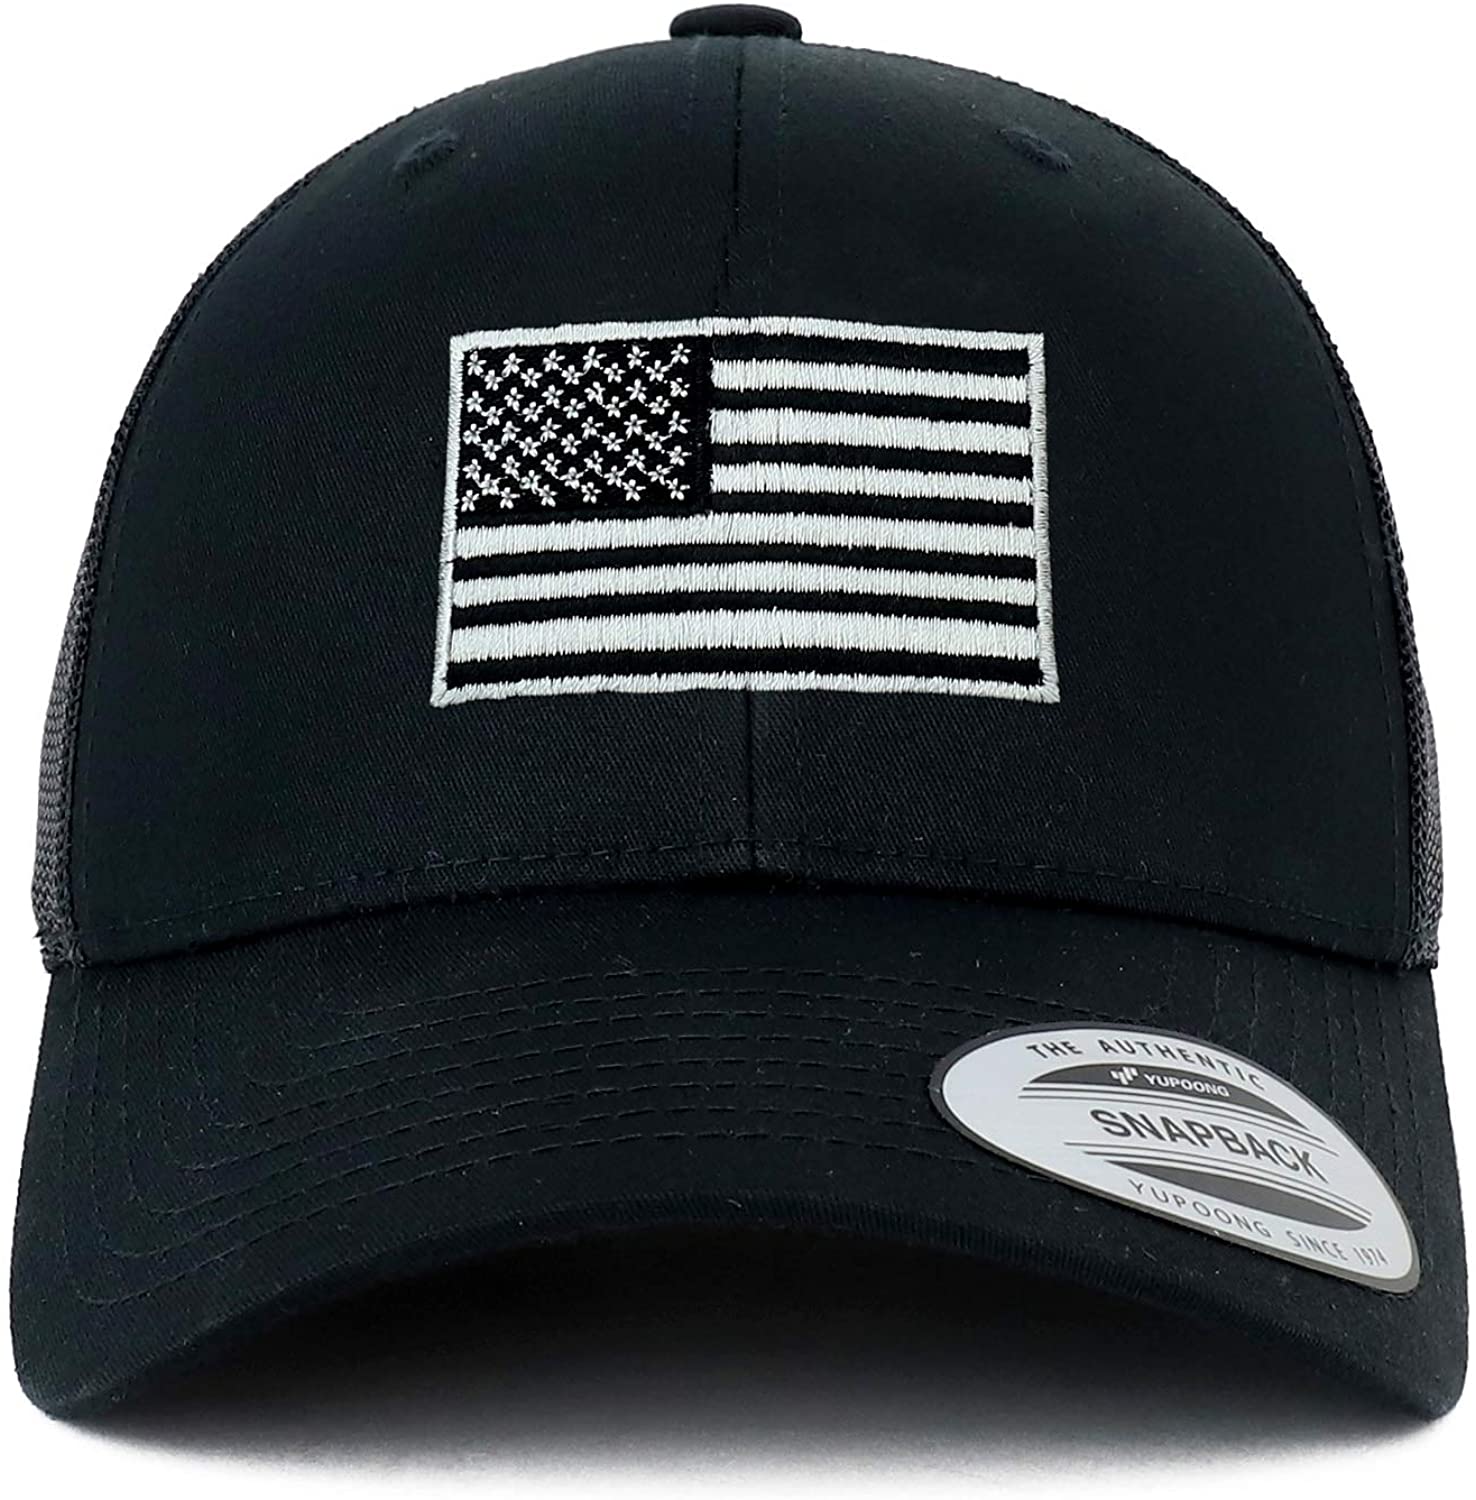 Armycrew Flexfit Oversize XXL Grey American Flag Embroidered Retro Trucker Mesh Cap